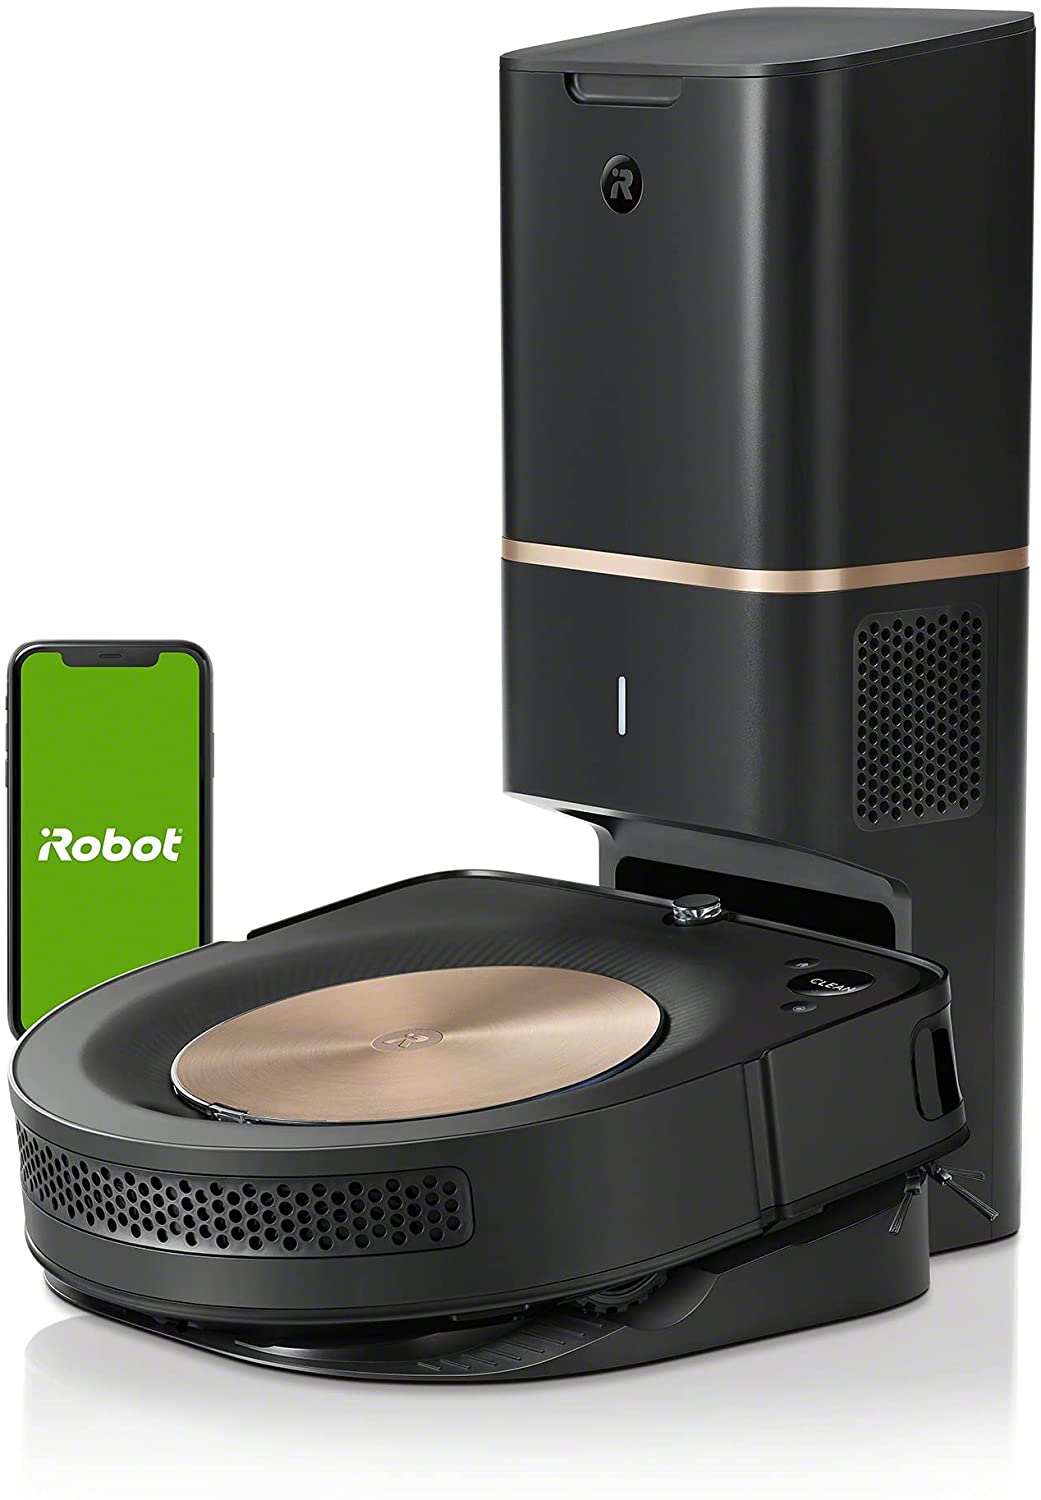 Roomba s9+ vs Roomba Combo j9+